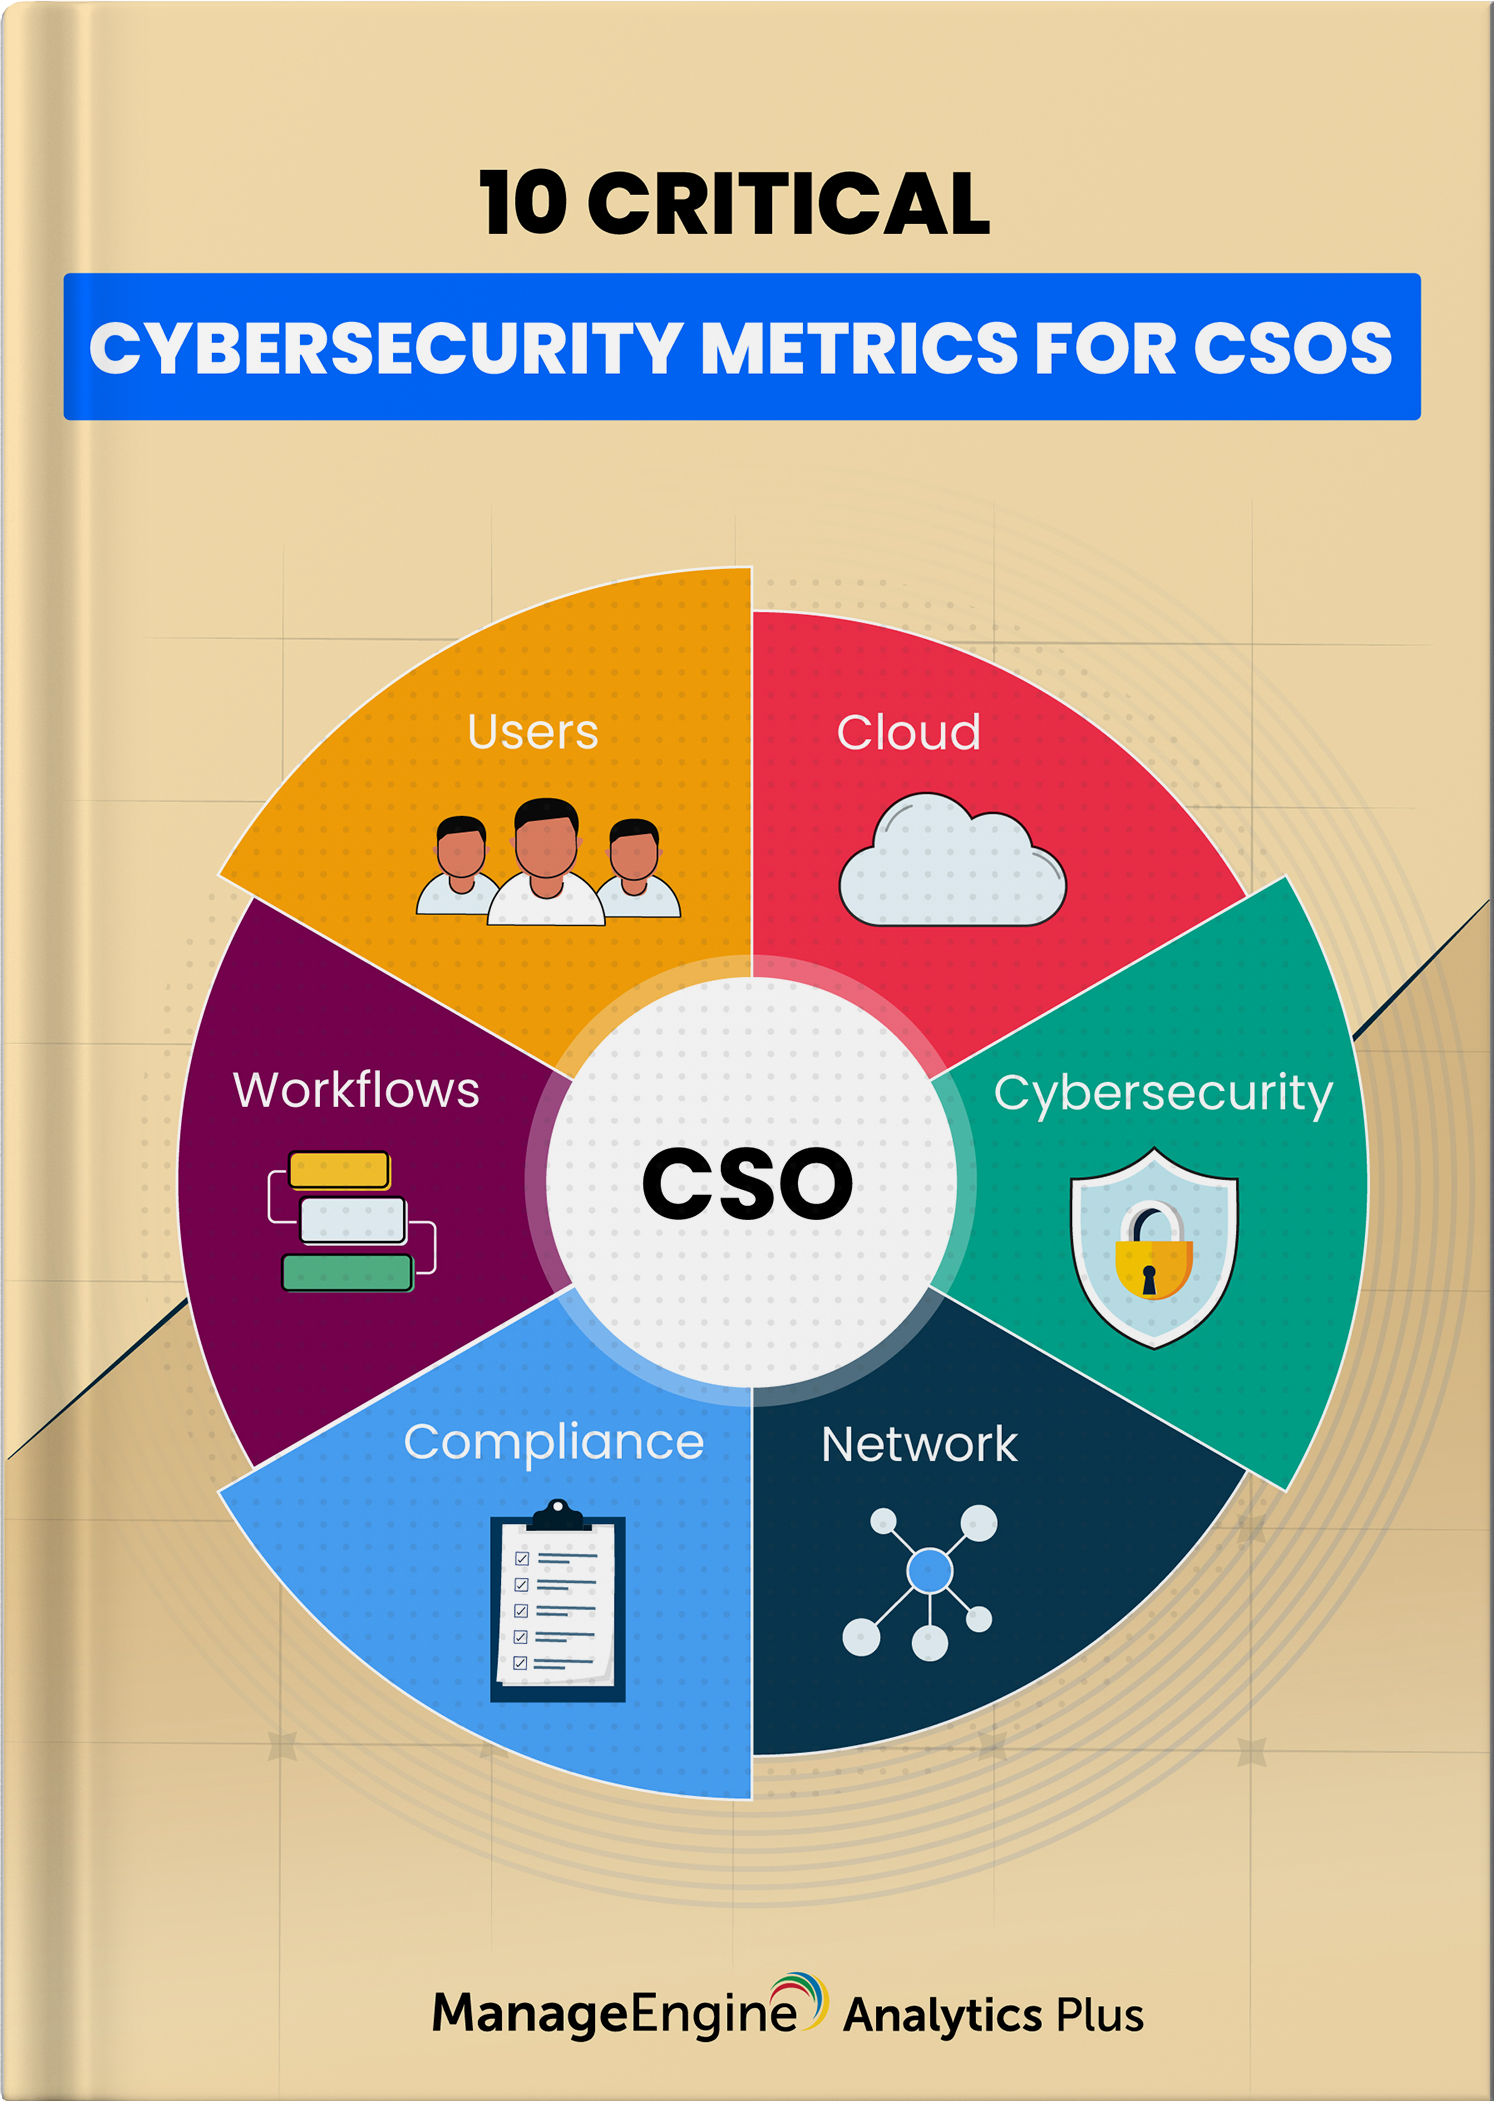 10 critical cybersecurity metrics for CSOs